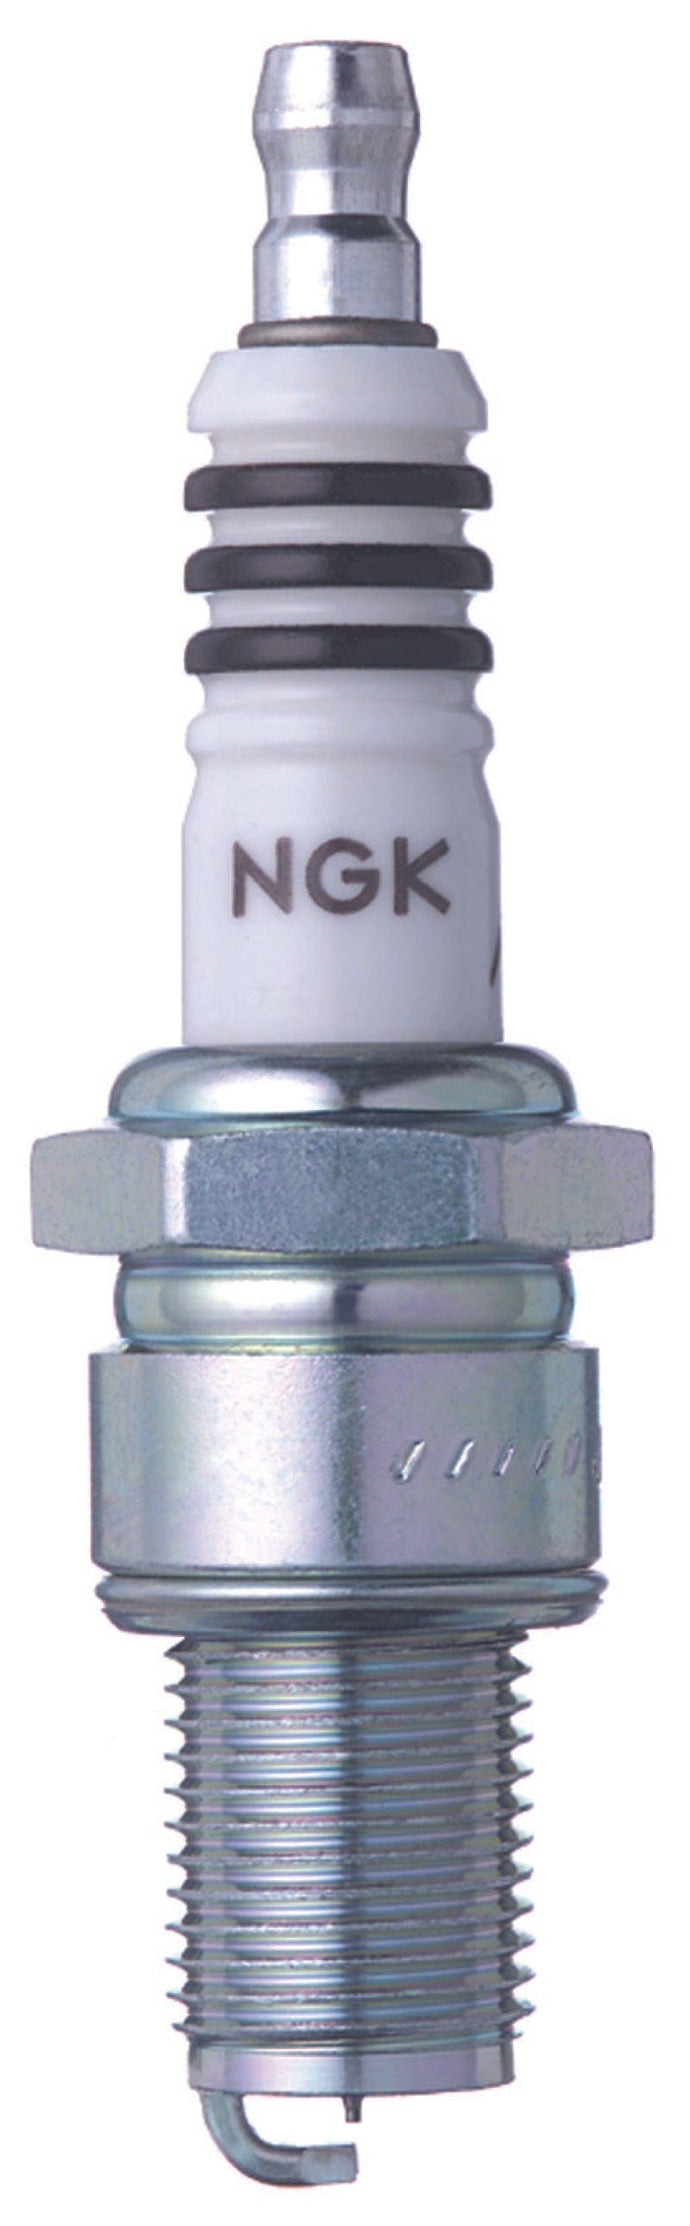 NGK NGK3981